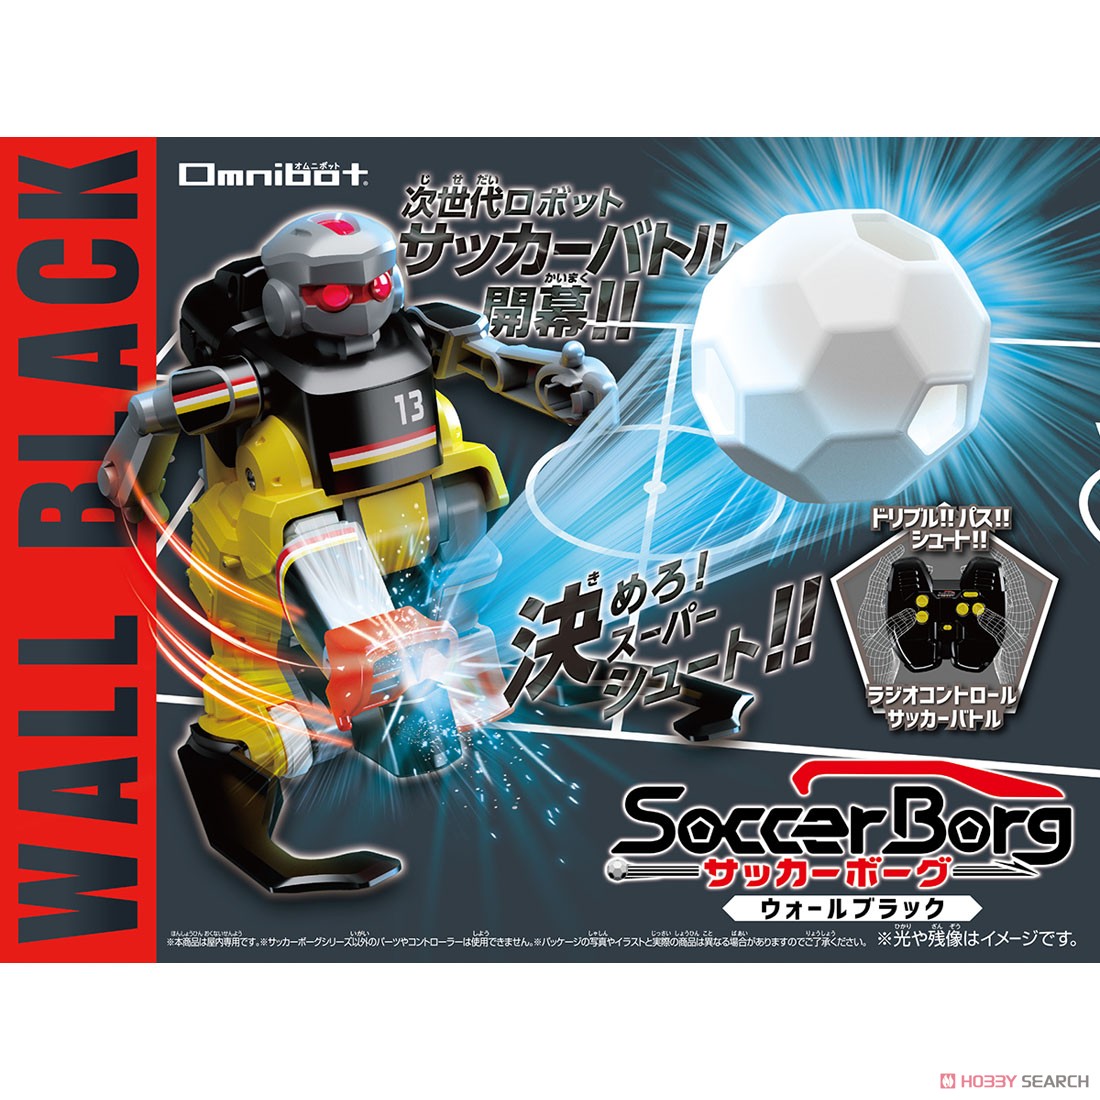 Omnibot サッカーボーグ ウォールブラック (電子玩具) パッケージ1